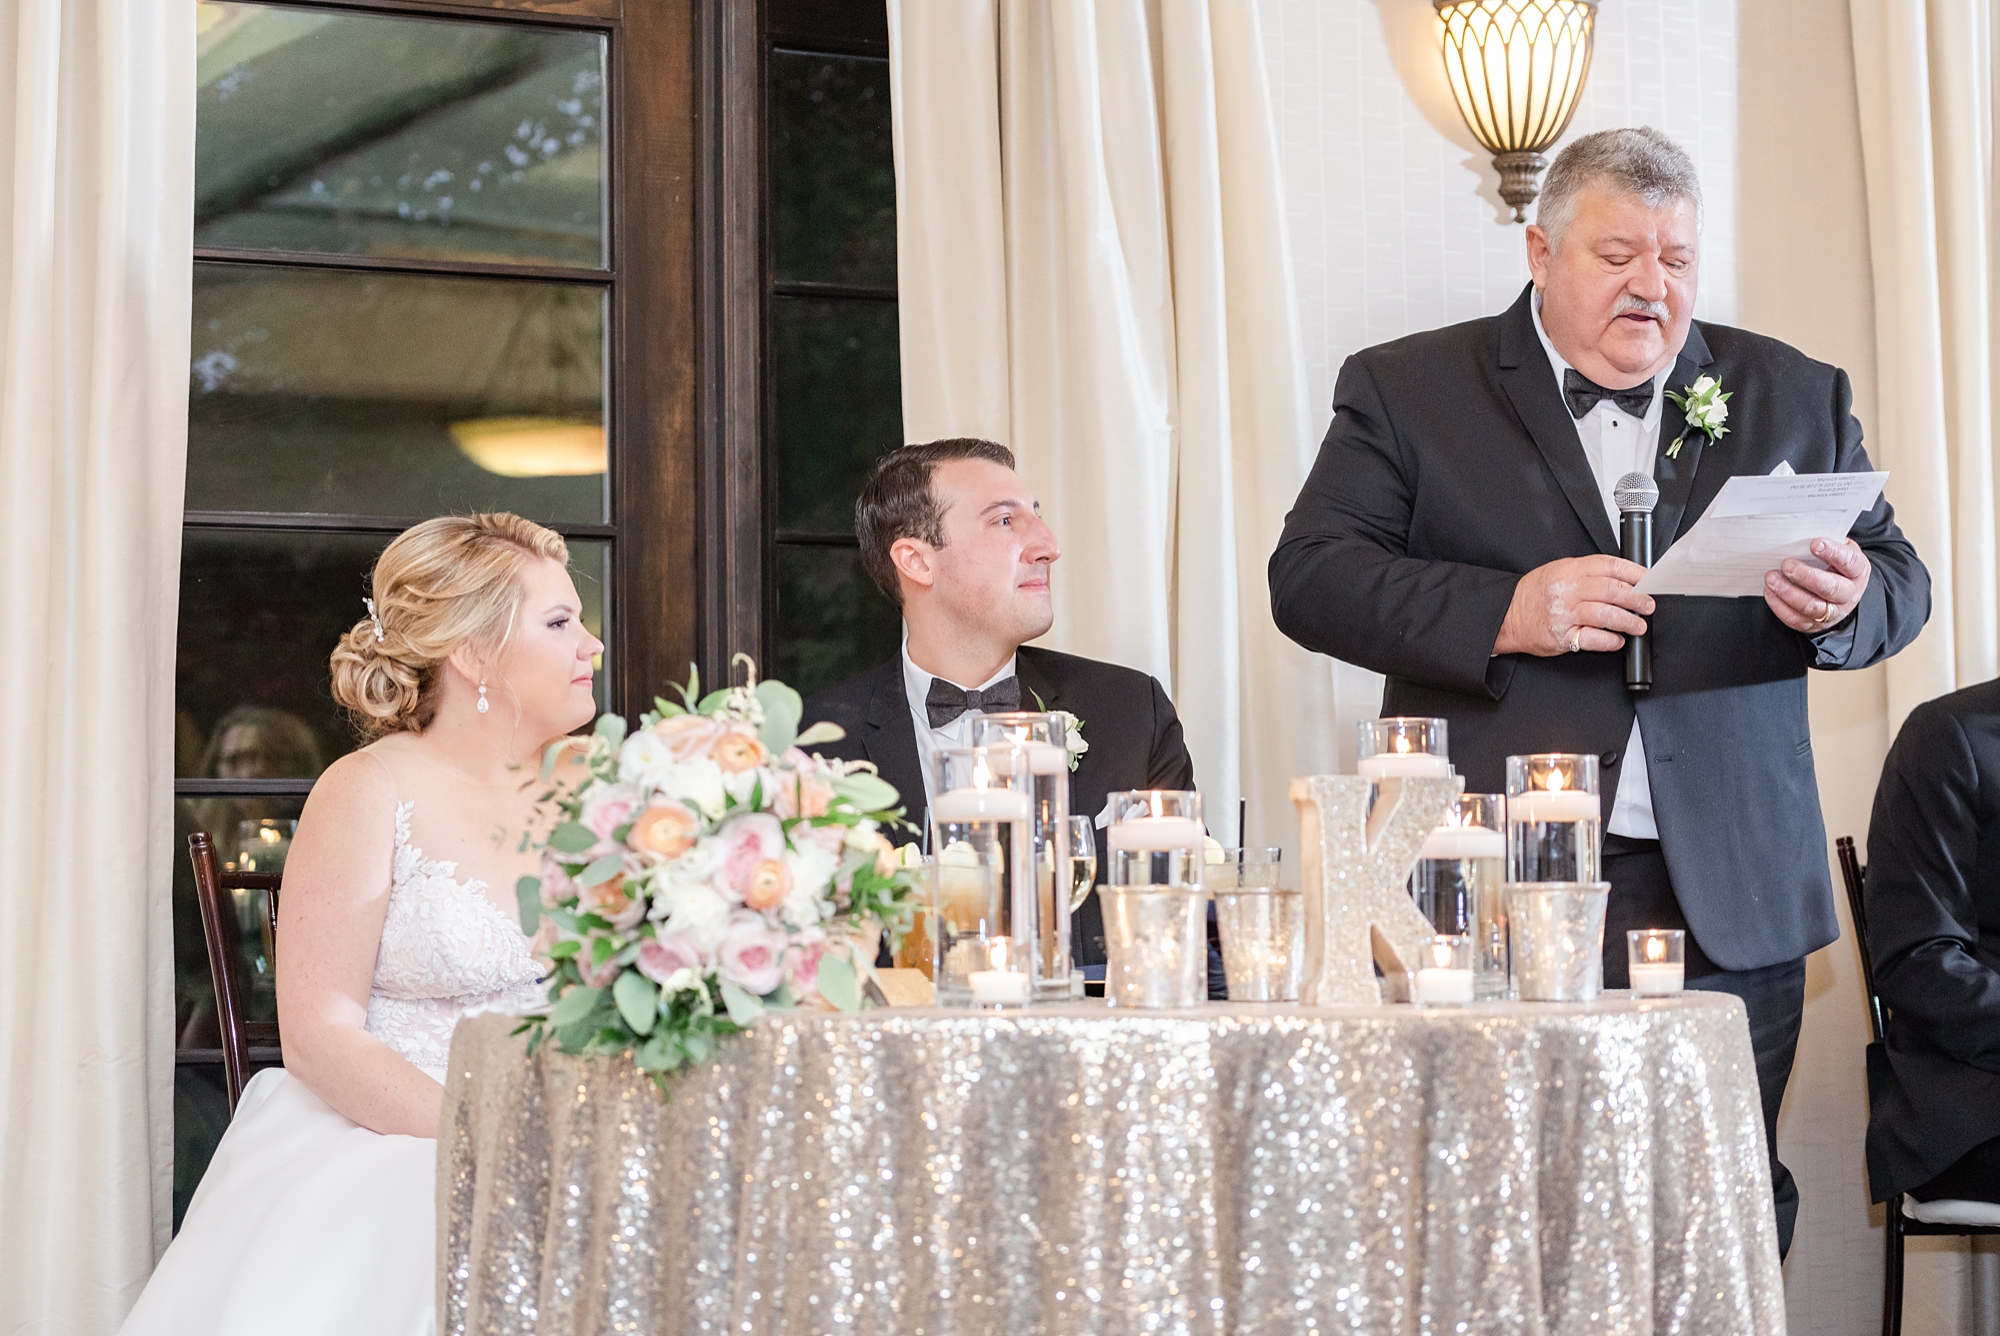 wedding toasts at Ohio wedding reception